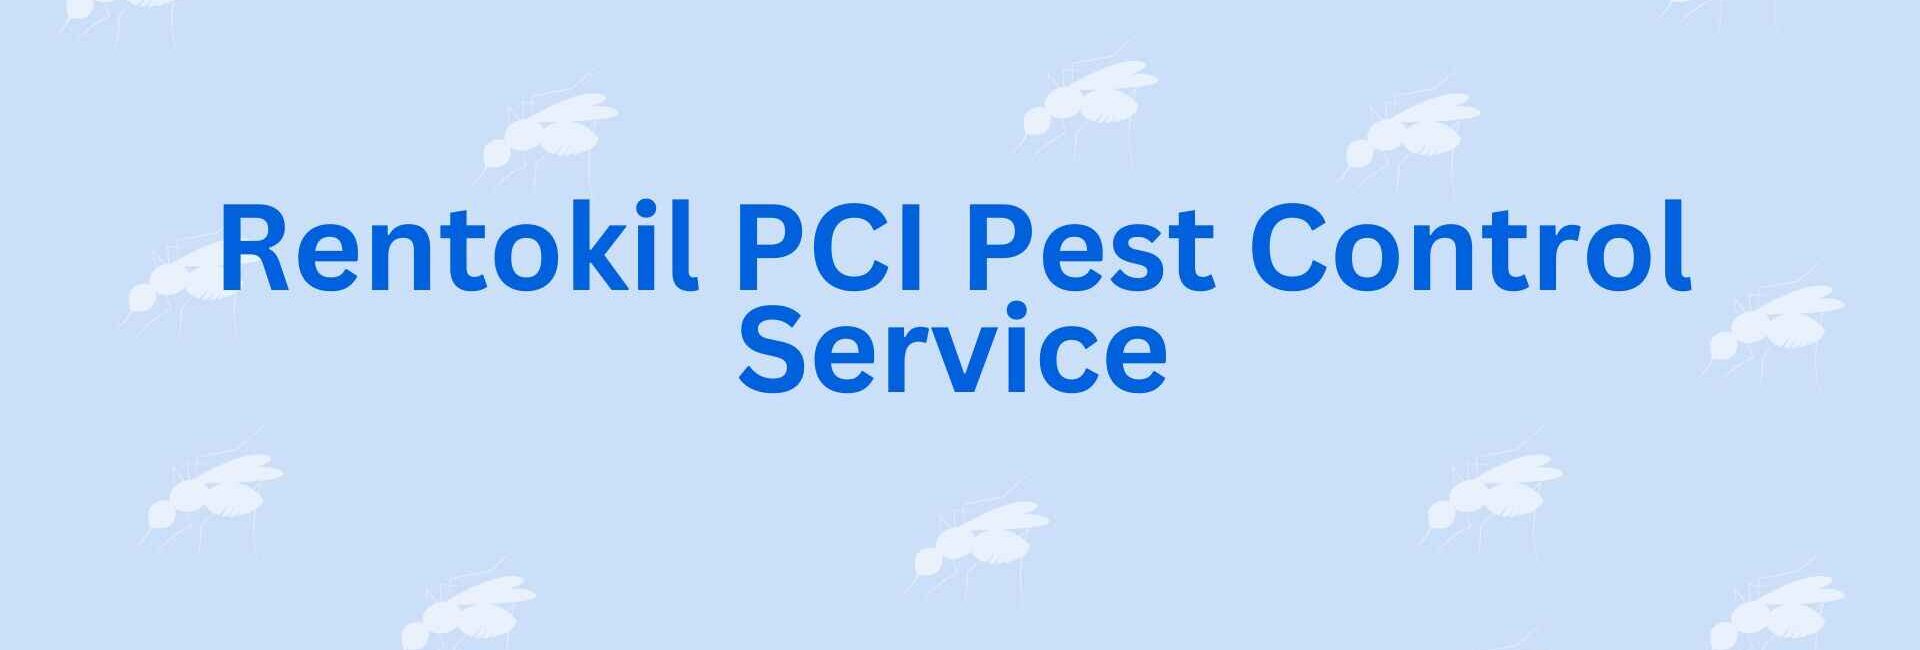 Rentokil PCI Pest Control Service - Best Pest Control in Noida